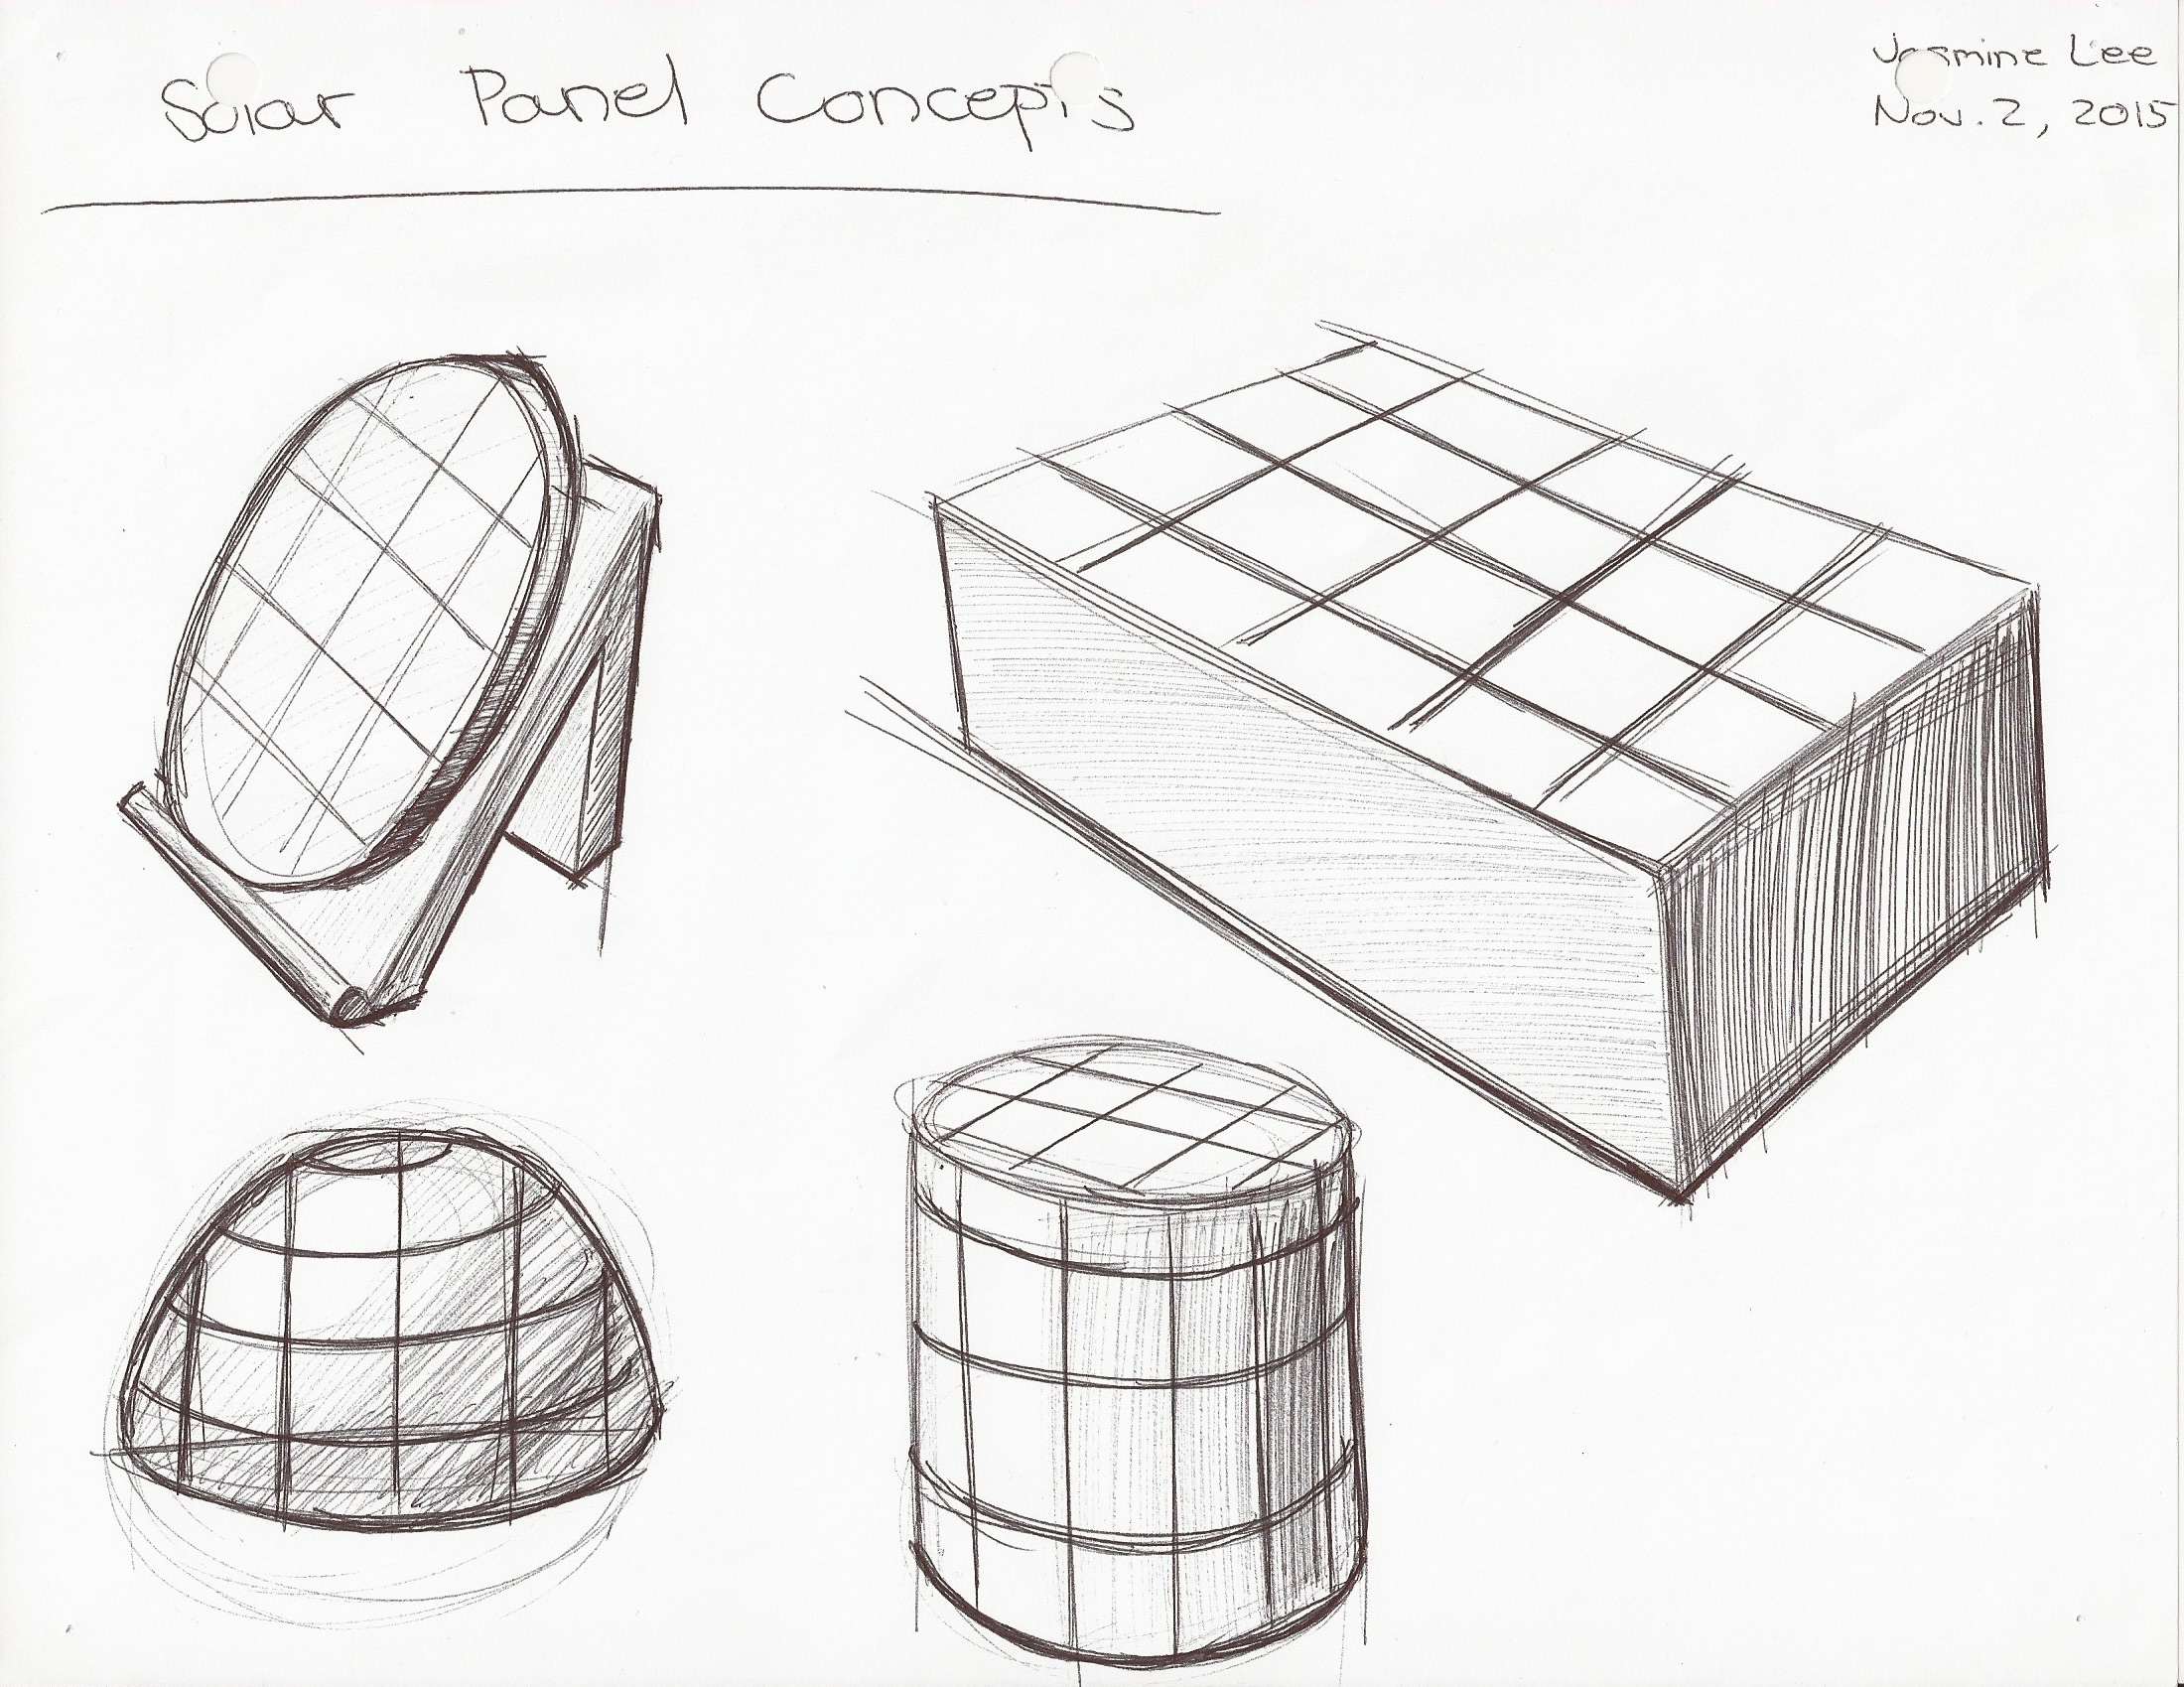 Solar Panel Concepts